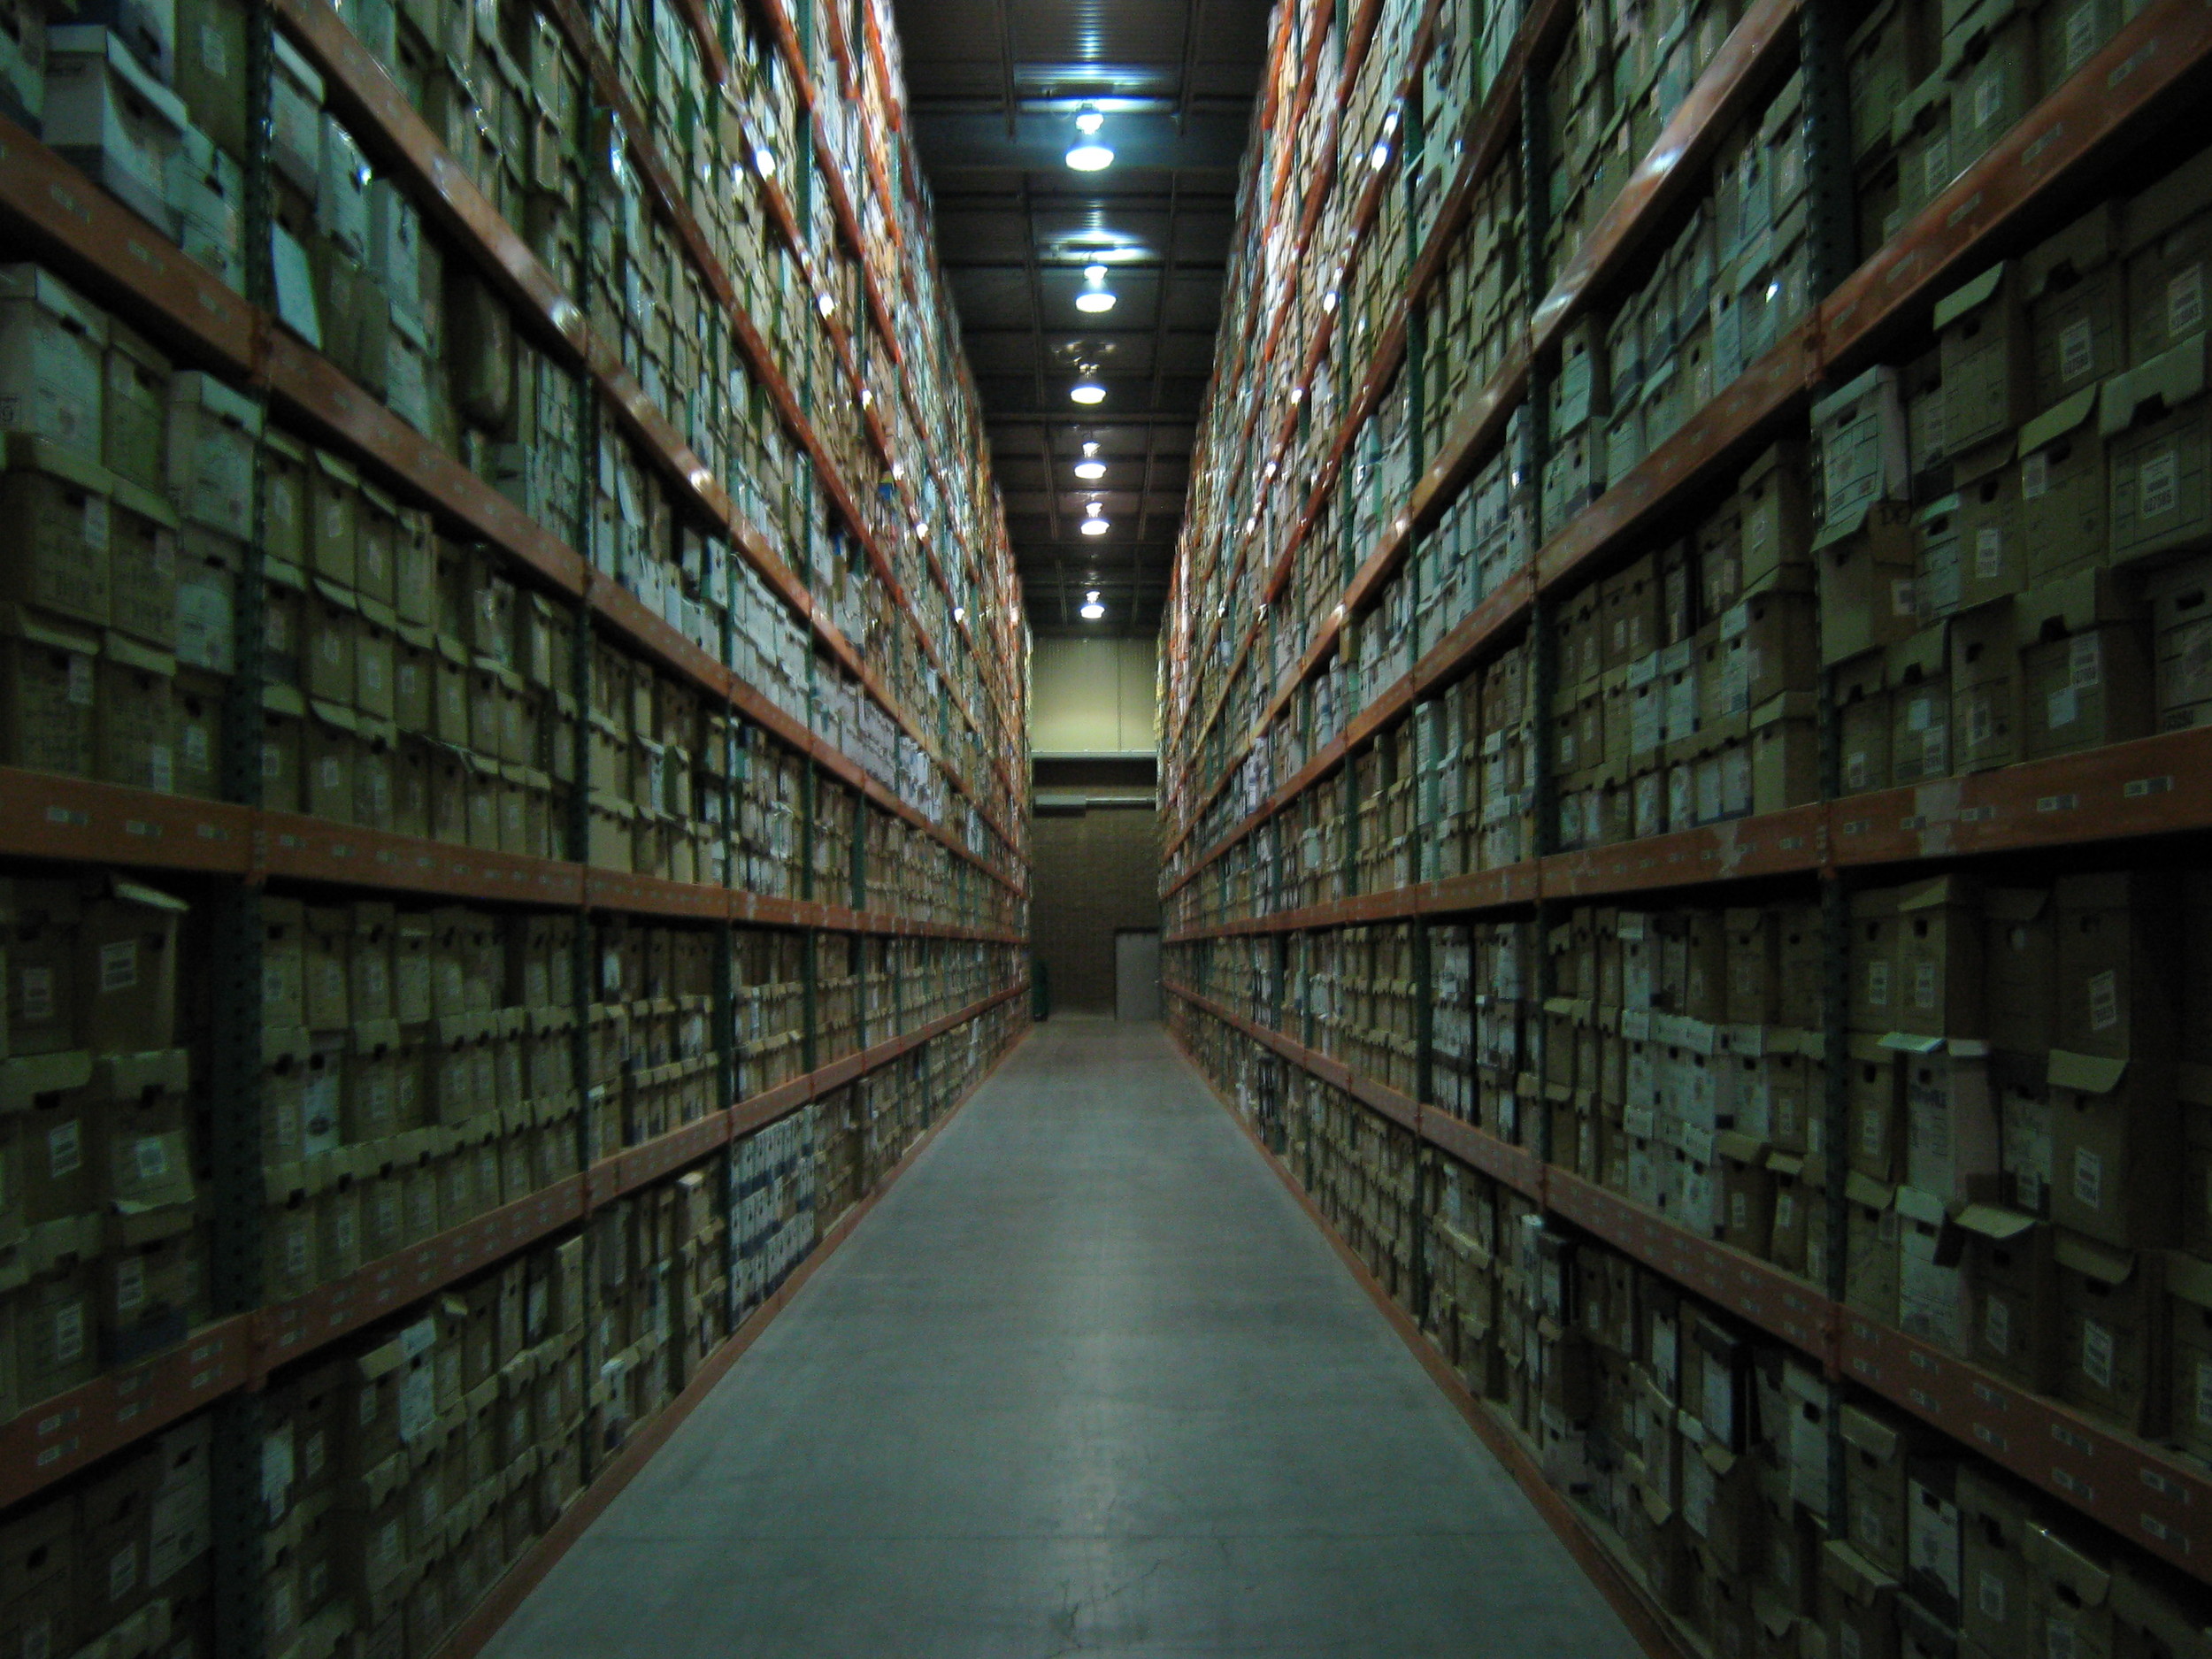 document storage aisle.JPG